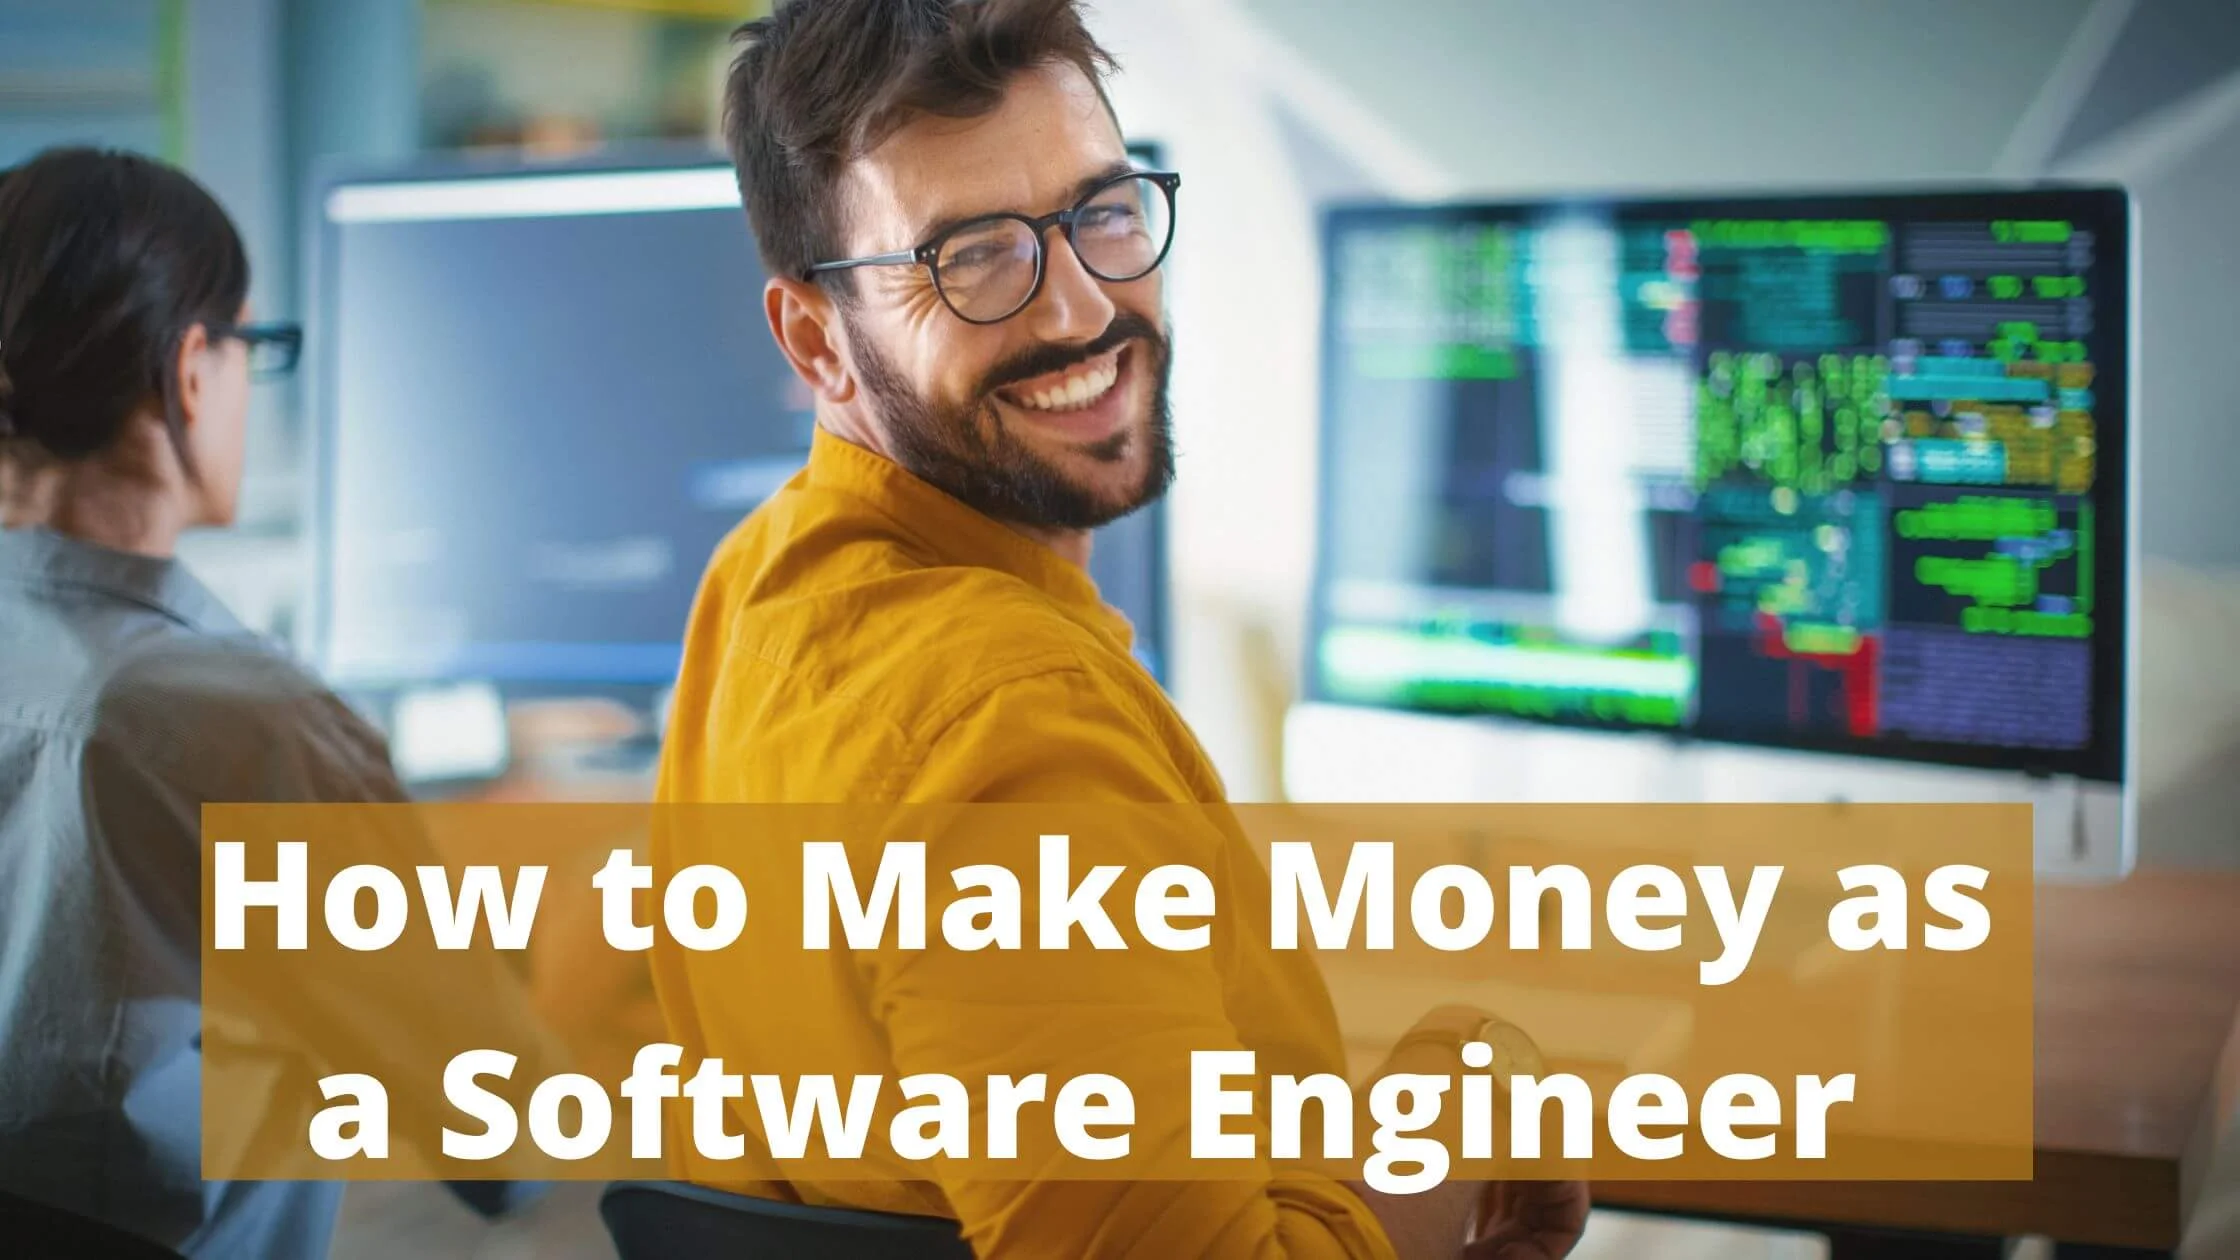 Make Money as a Software Engineer